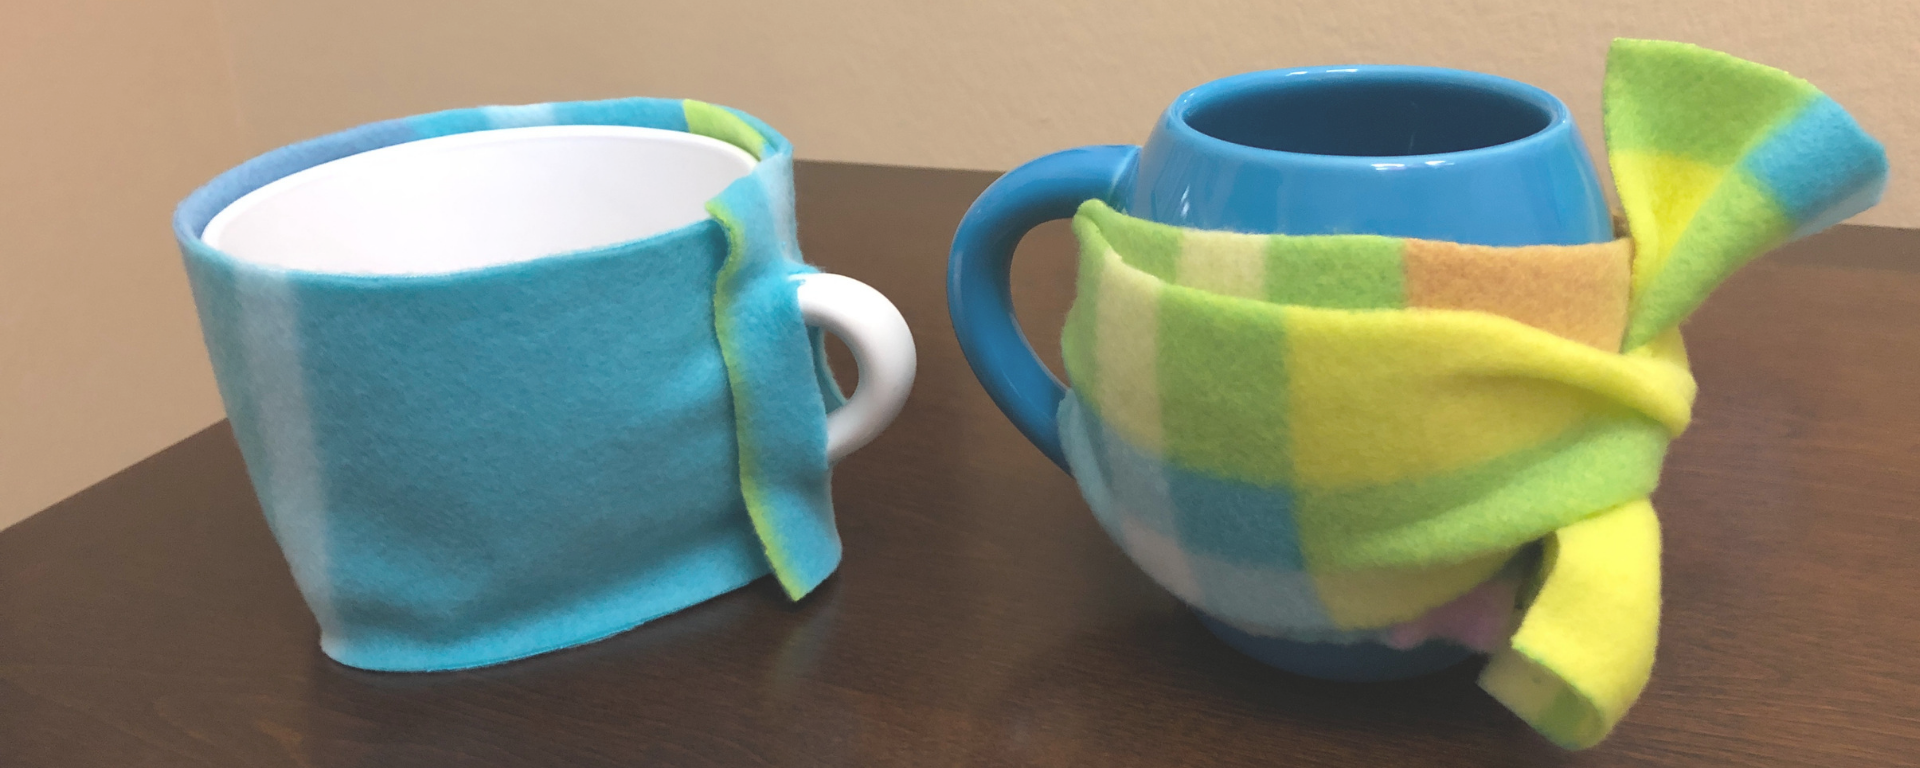 Two mugs with DIY fleece koozies wrapped around them.